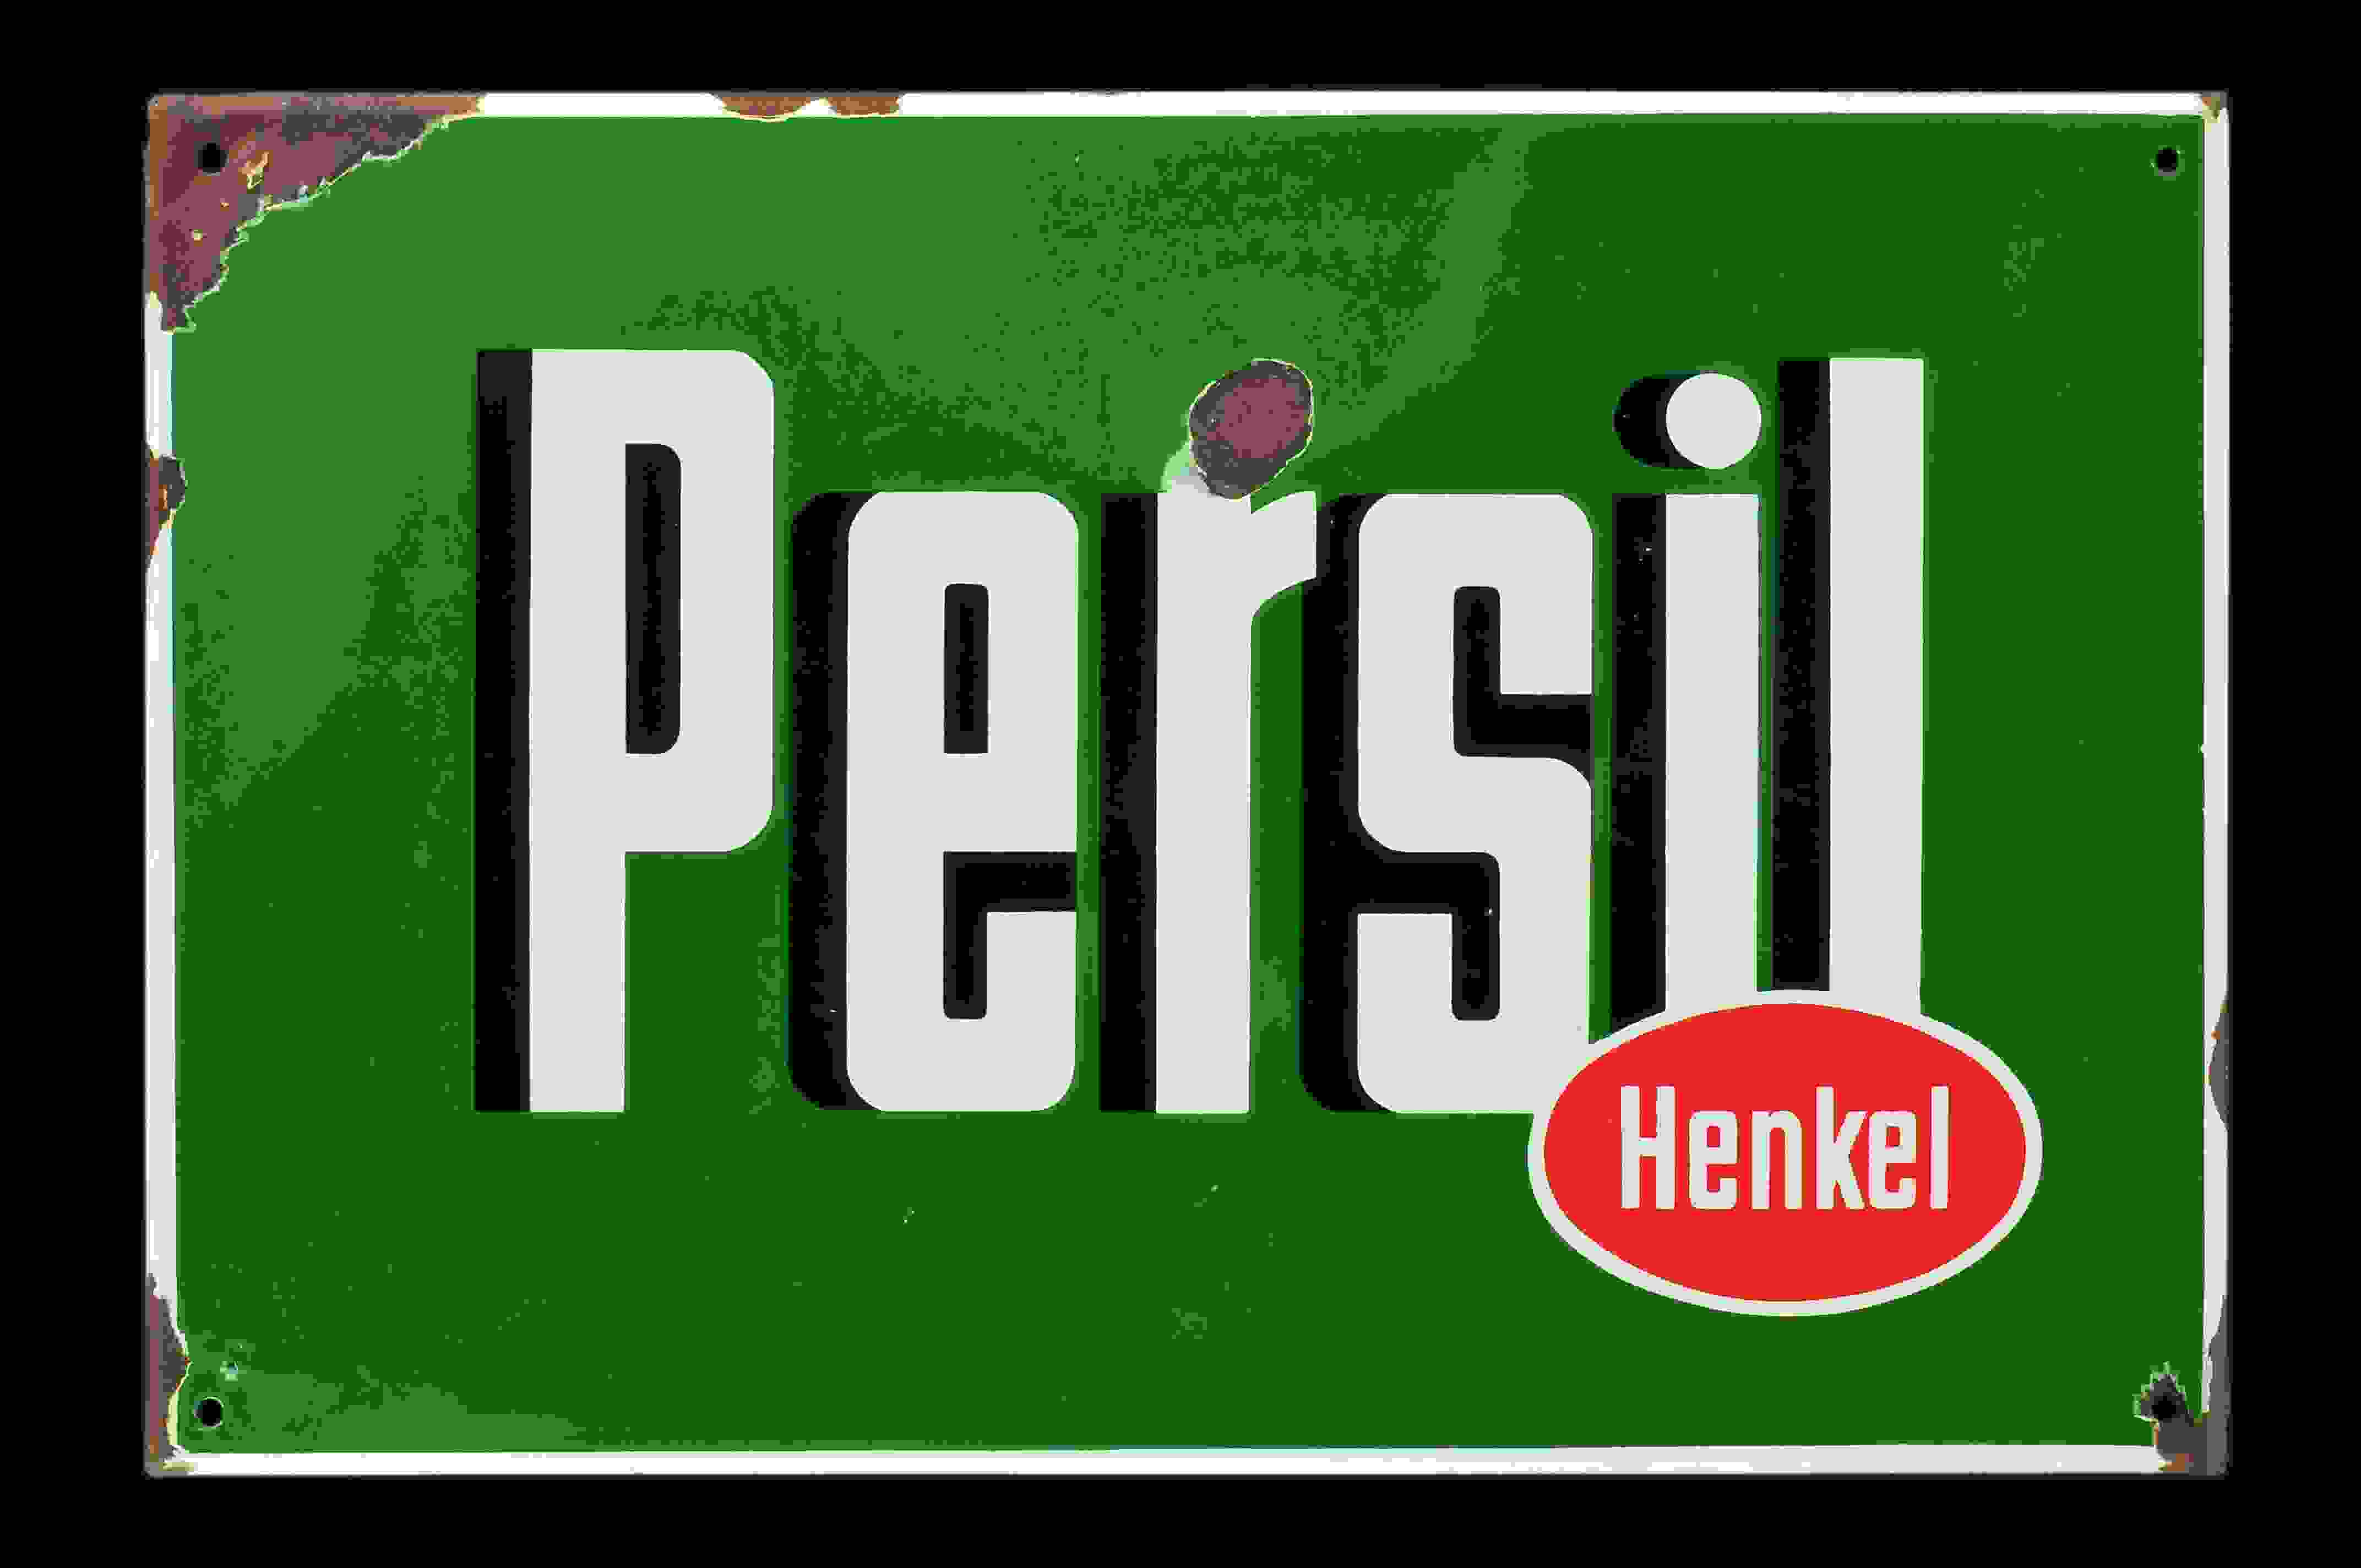 Persil Henkel 